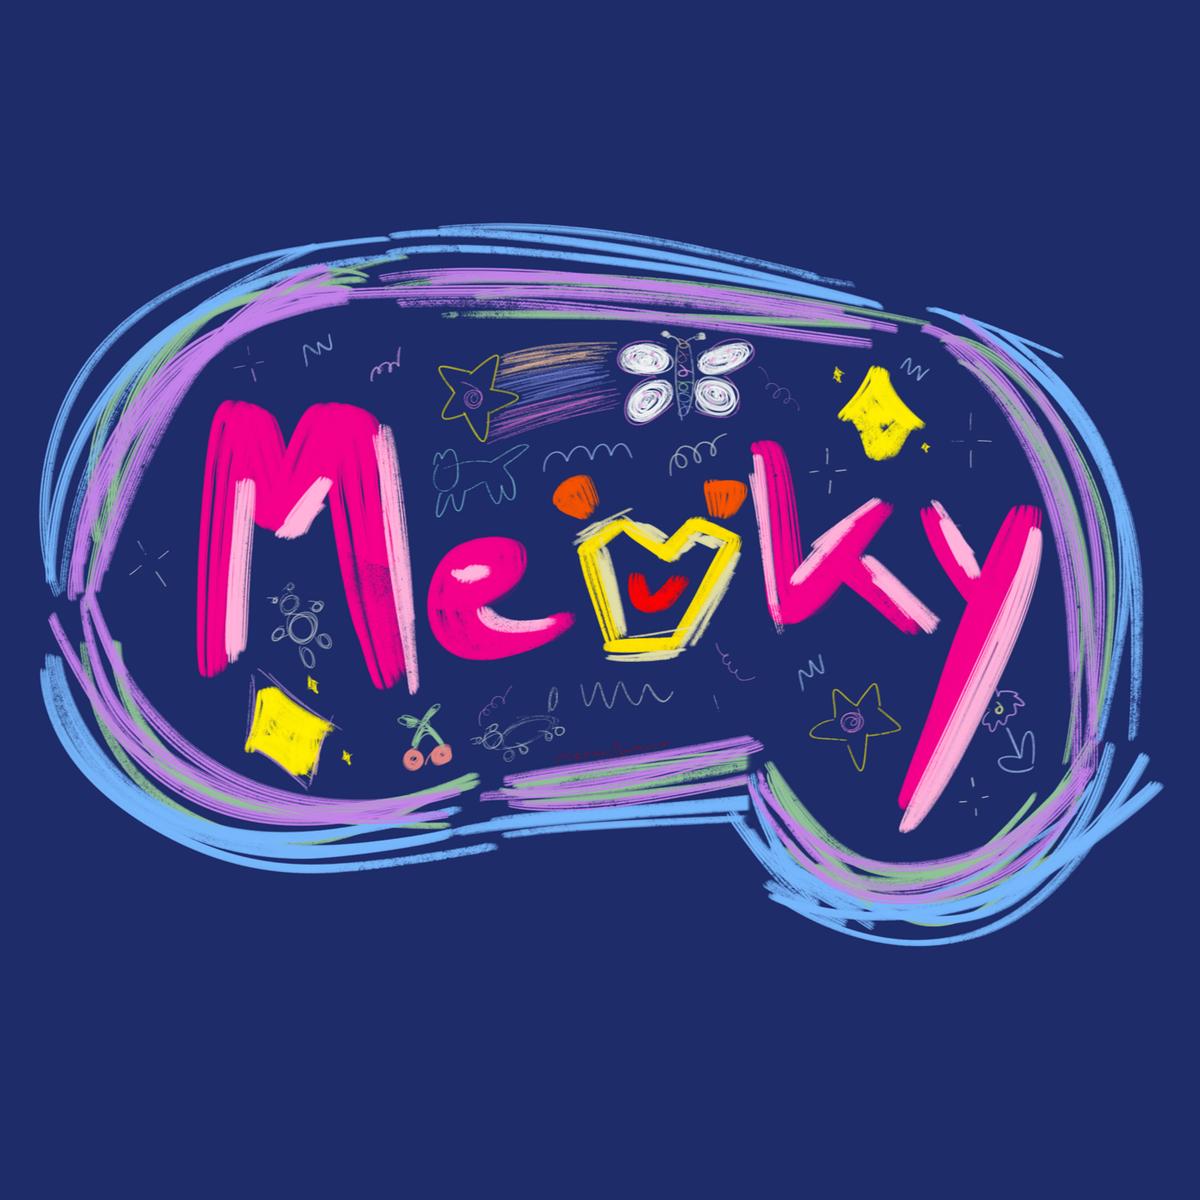 Merky